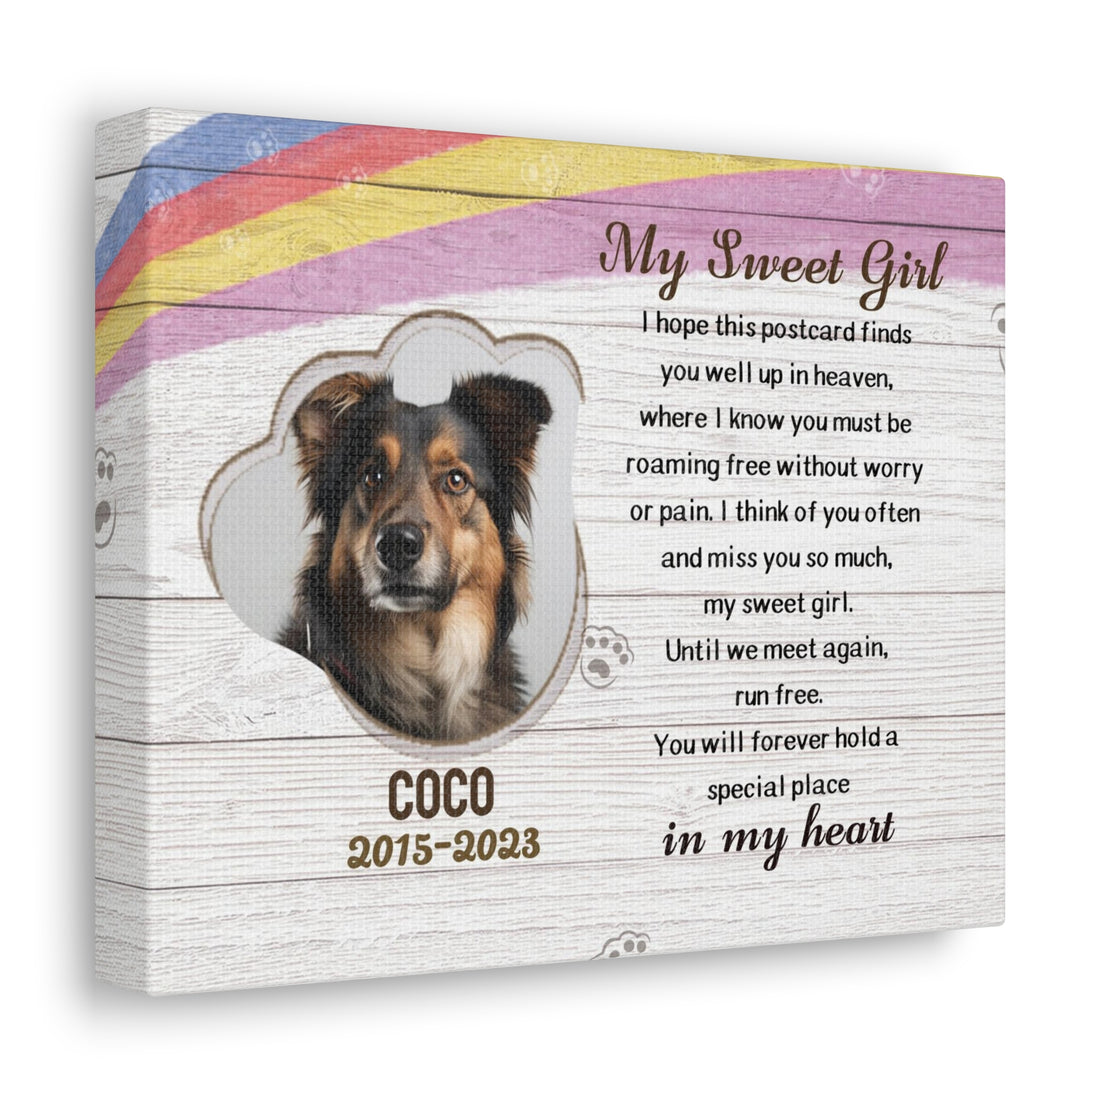 Dear Old Friend - Personalized Canvas Print Pet Memorial